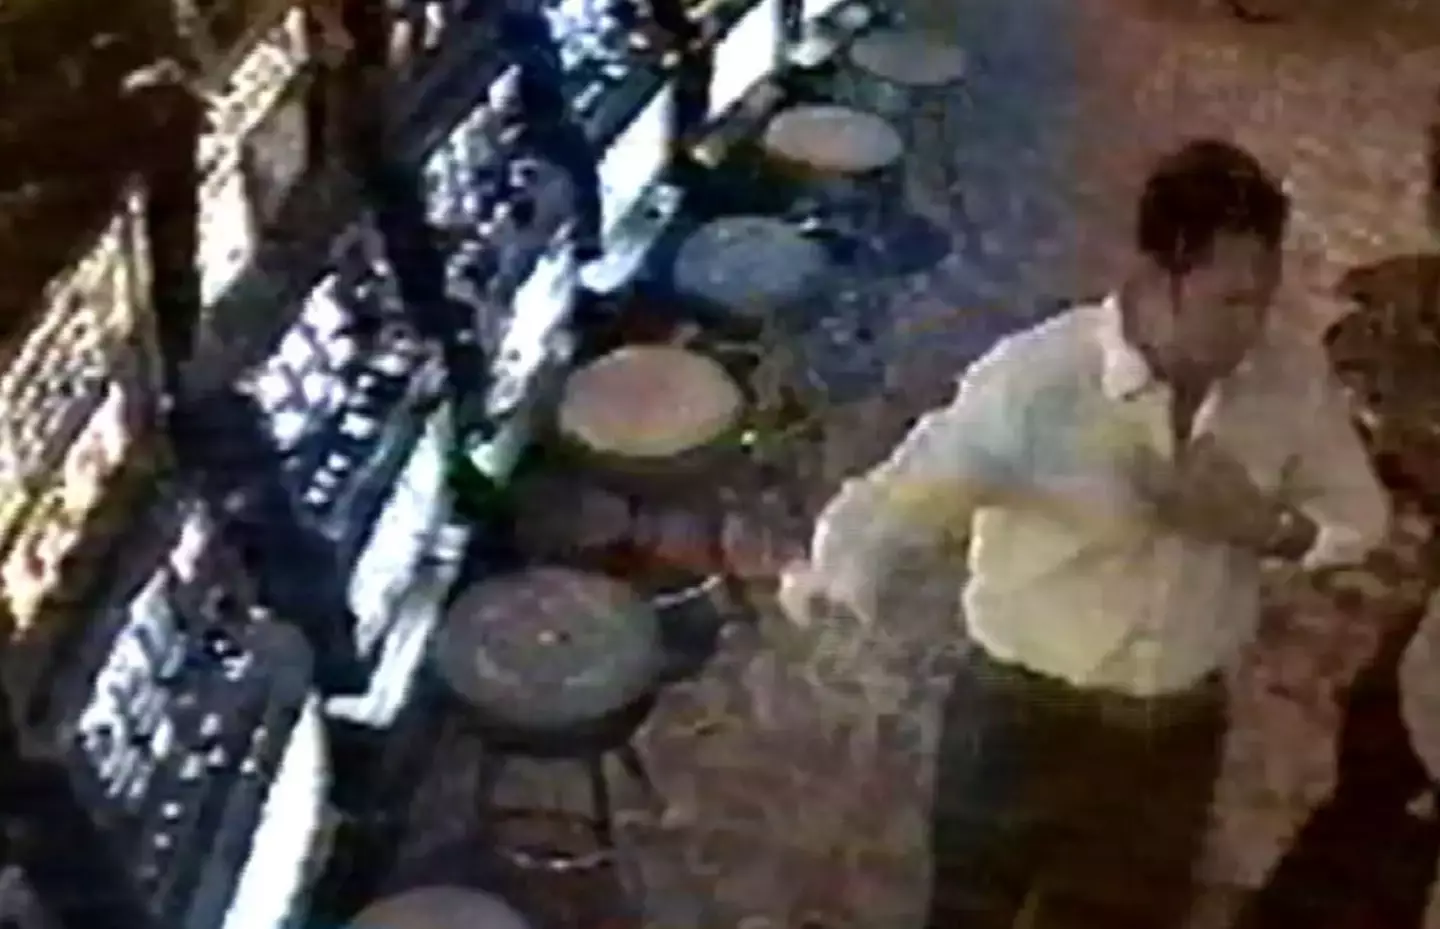 George was last seen alive on CCTV casino footage. (Royal Caribbean)